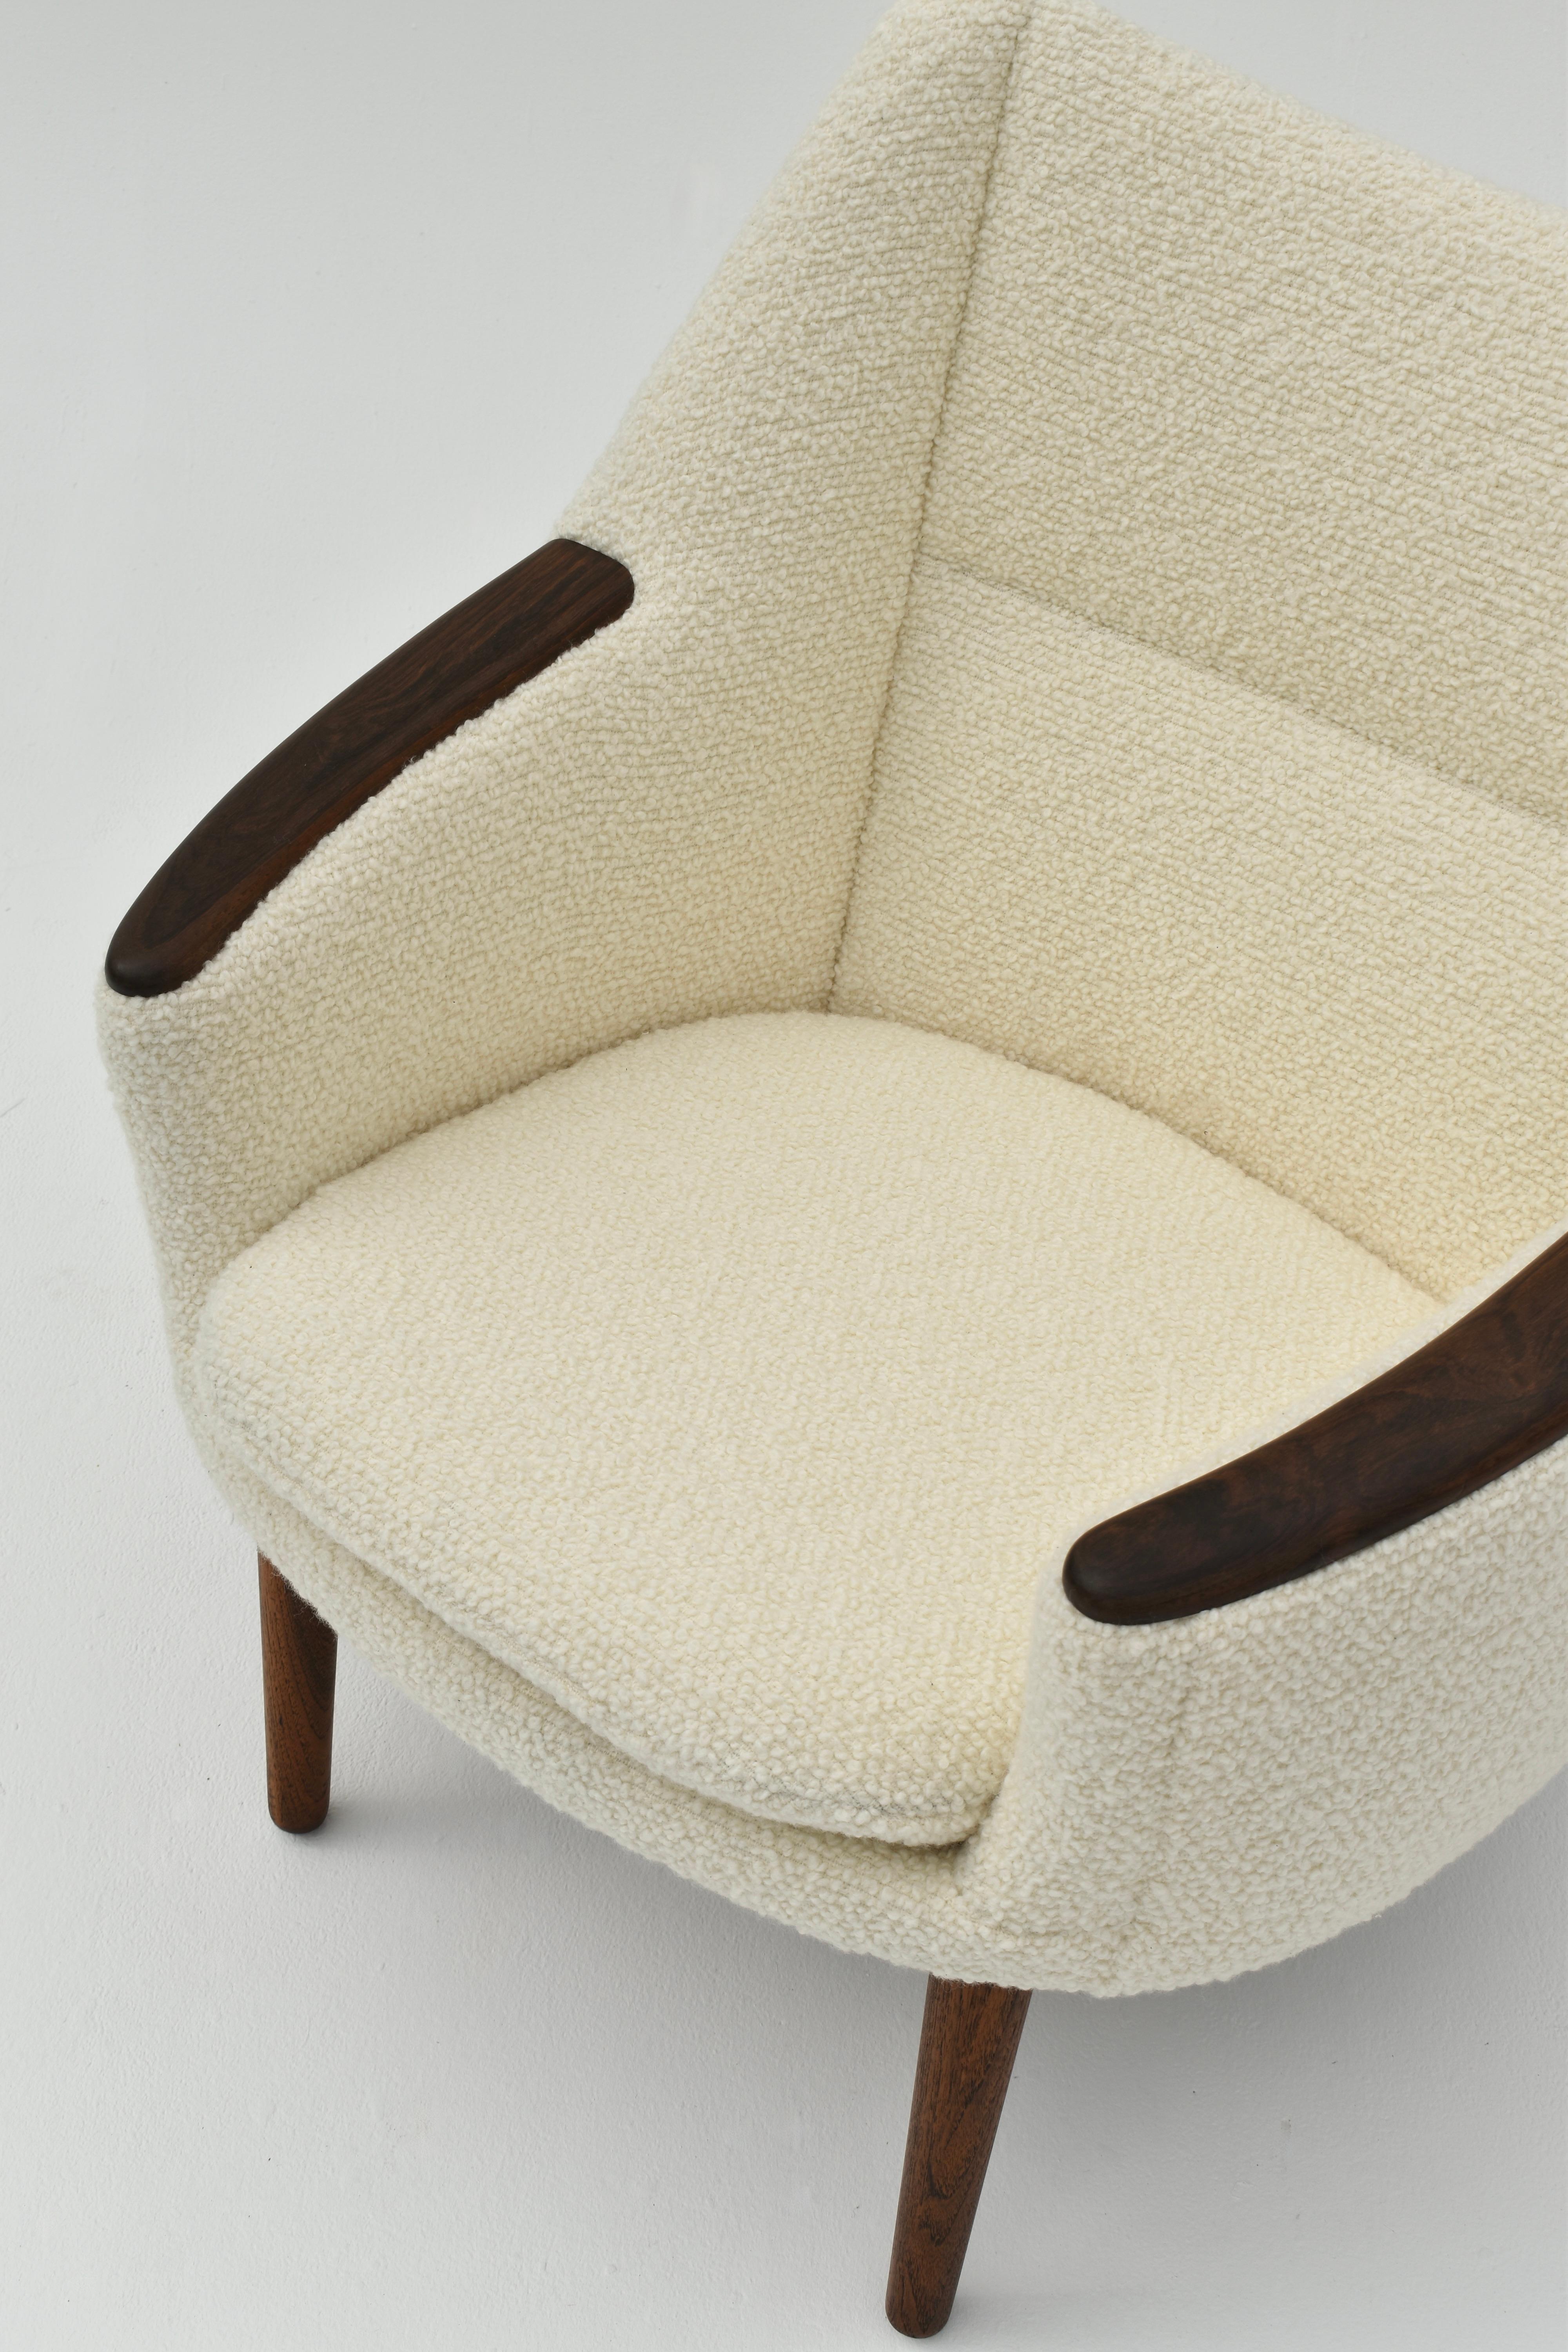 Midcentury Kurt Østervig Model 58 Lounge Chairs for Henry Rolschau Mobler For Sale 7